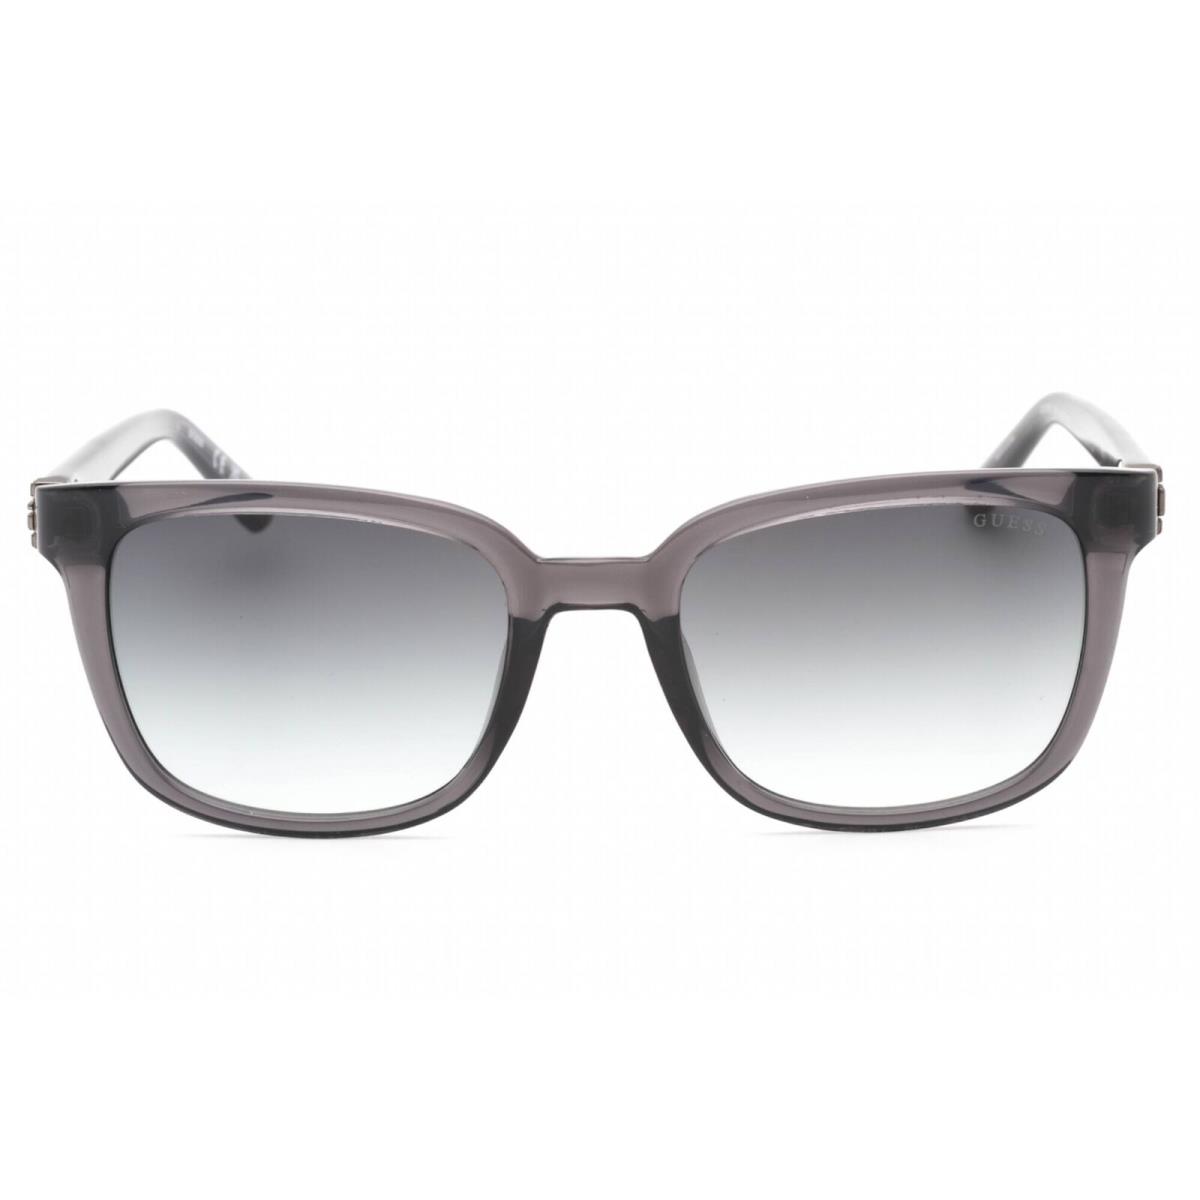 Guess Men`s Sunglasses Gradient Smoke Lens Transparent Grey Frame GU00065 20B